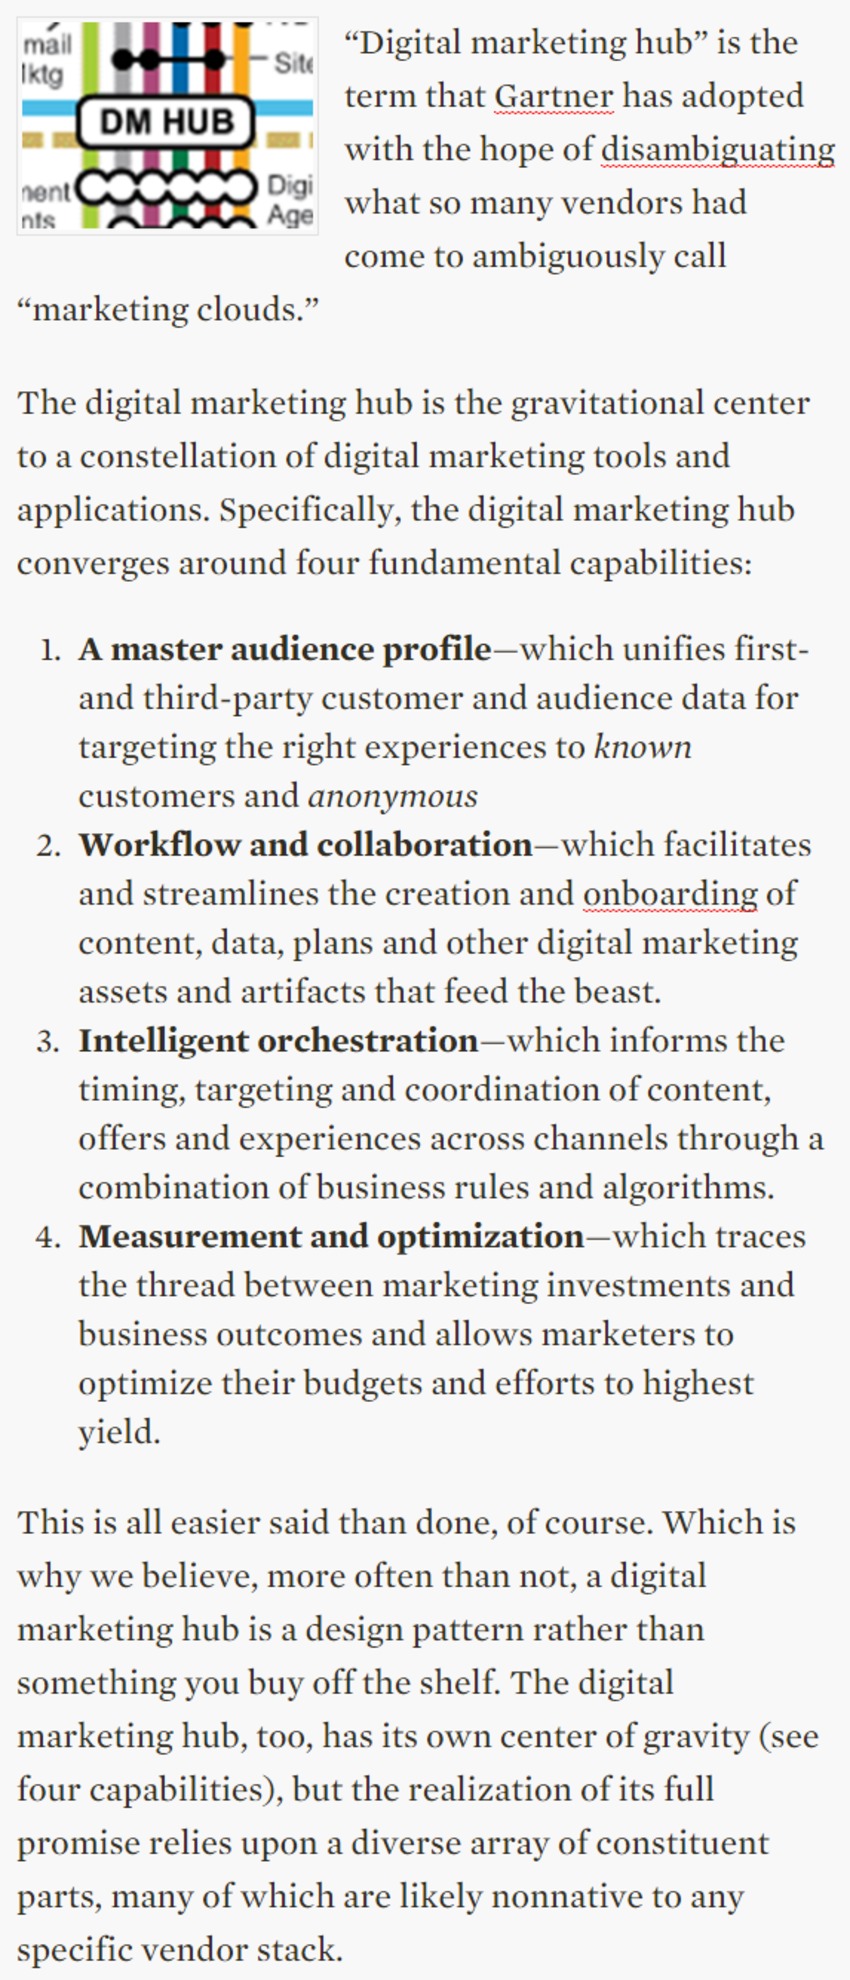 Digital Marketing Hubs Are the Center of the Digital Marketer’s Universe - Gartner | The MarTech Digest | Scoop.it